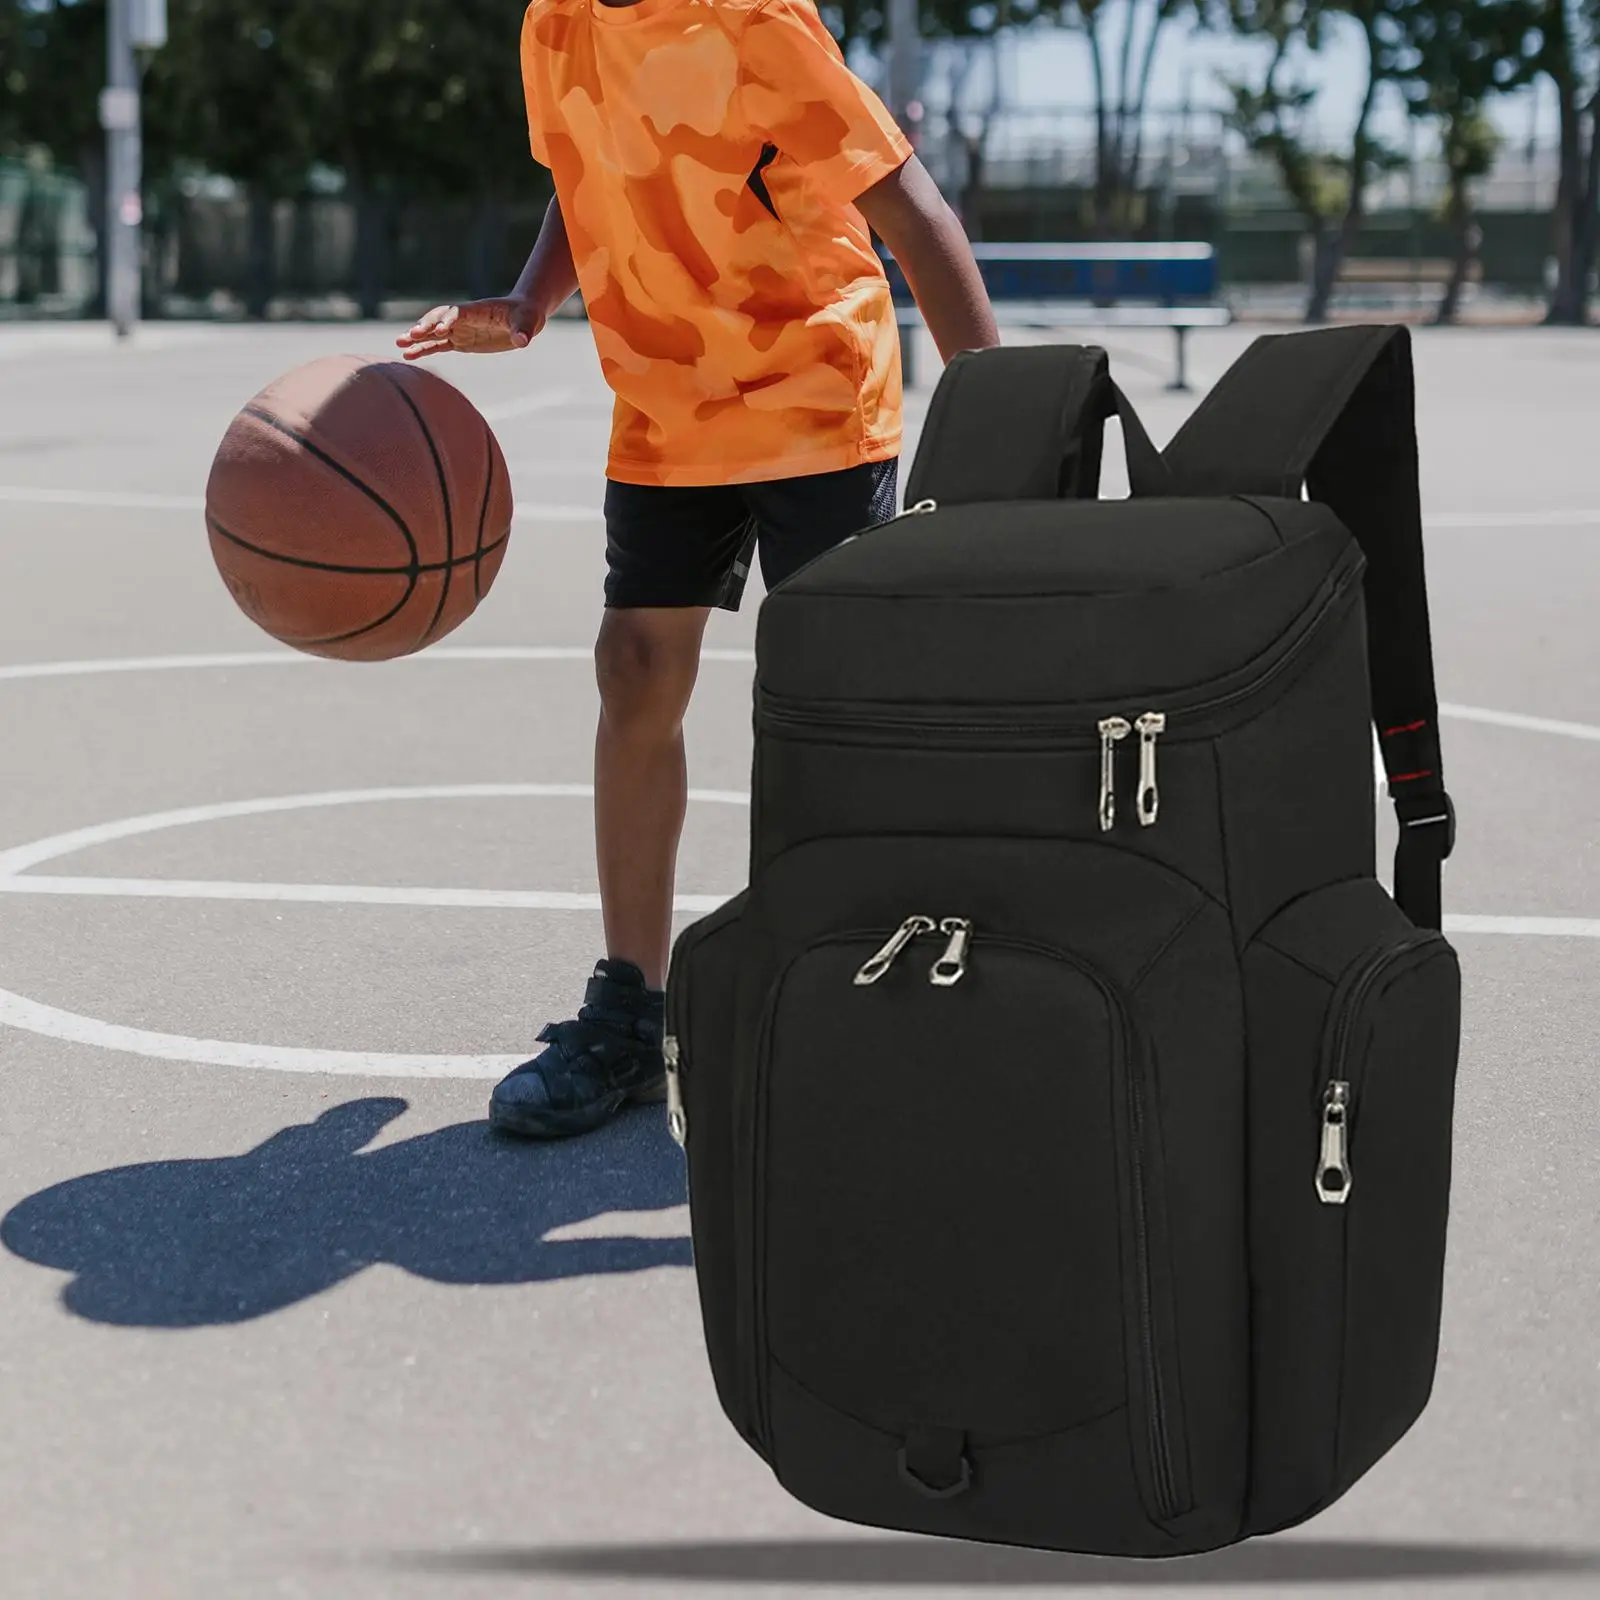 Durable Basketball Backpack Rucksack Daypacks Oxford Cloth Sport Equipment Bag for Running Swimming Outdoor Fitness School